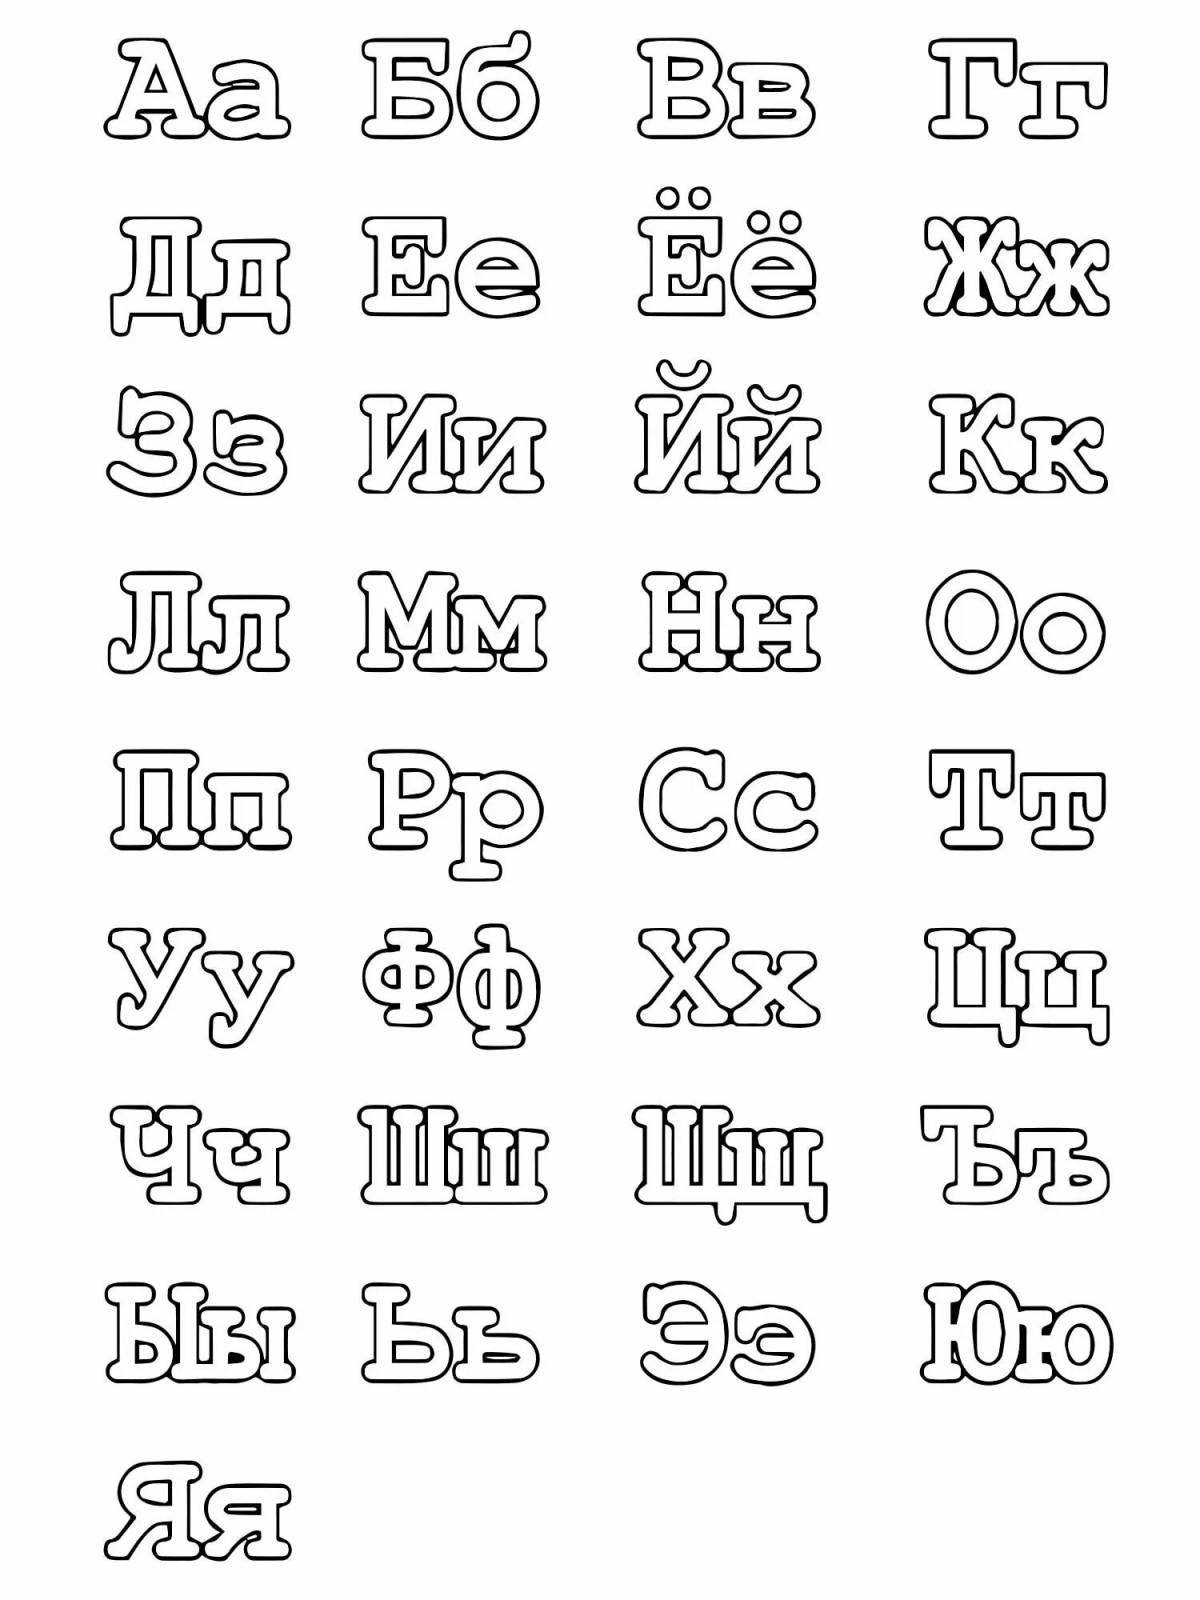 Russian alphabet for kids #13